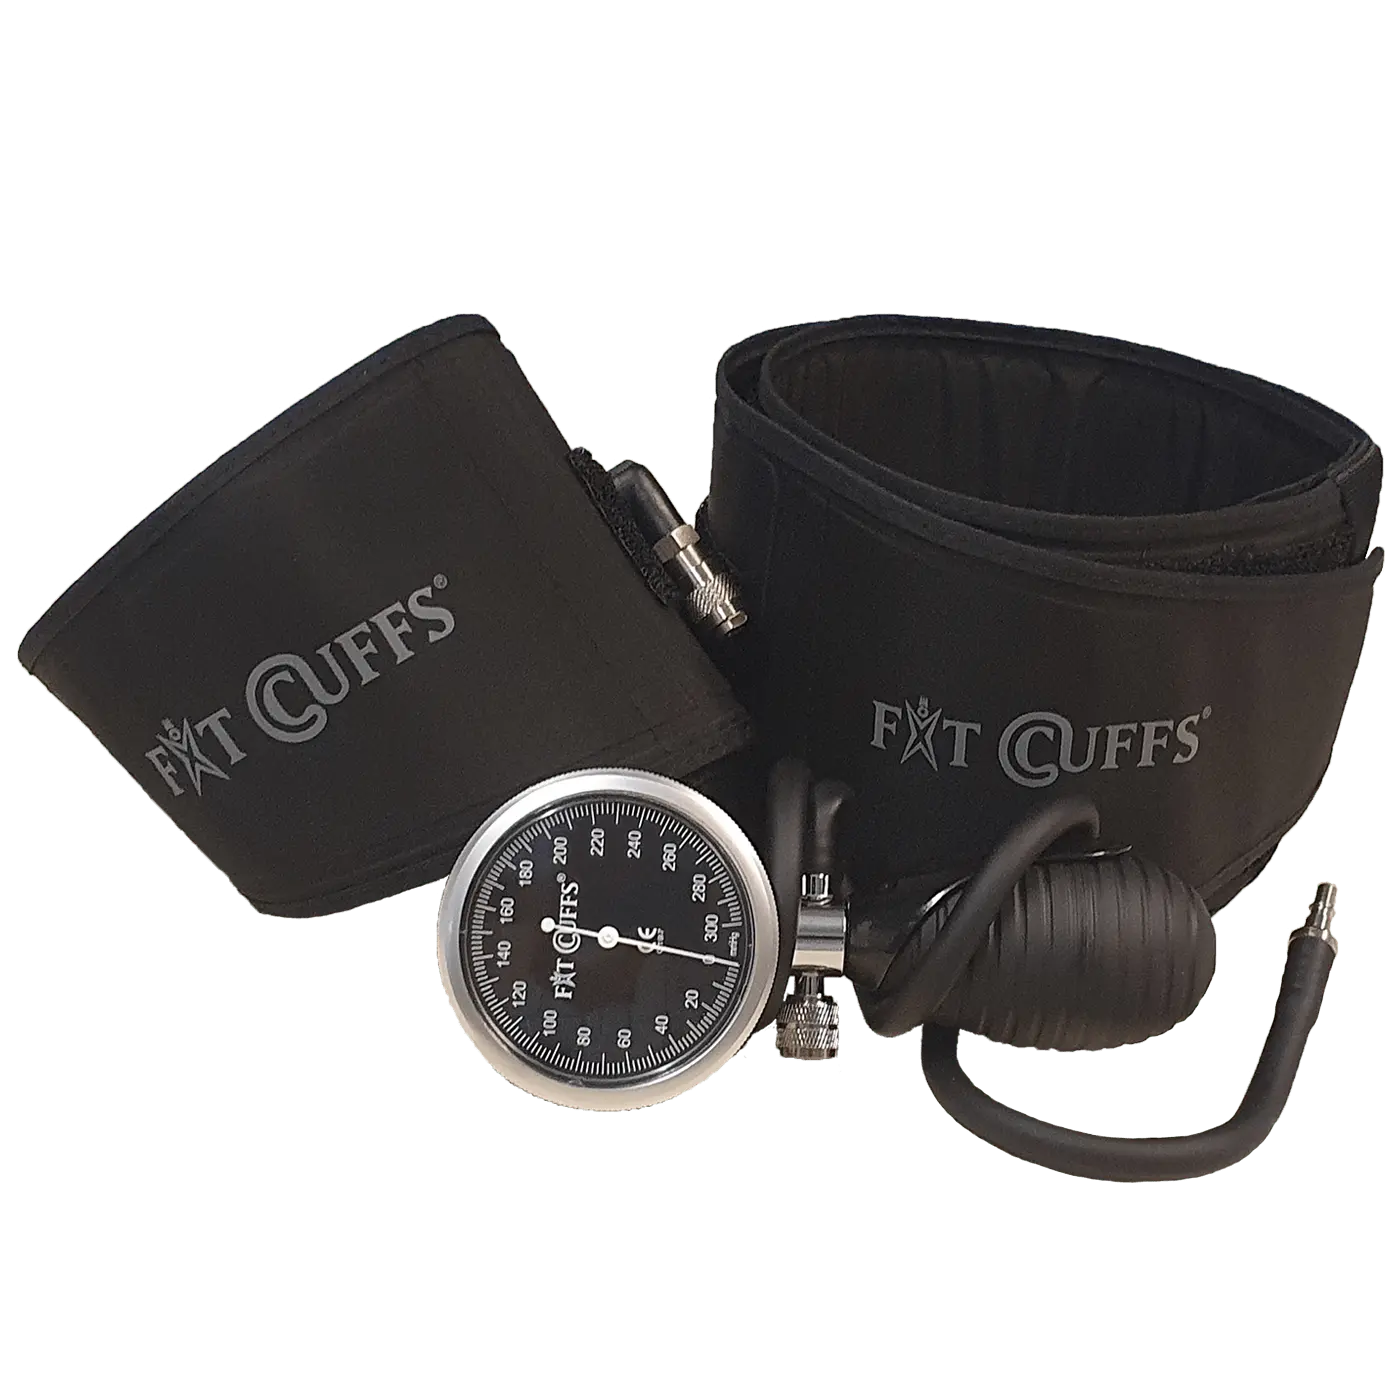 Se Fit Cuffs - Performance Lower V3.1 Hard Case (Limited Edition) - Standard - Black hos Fitcuffs.com